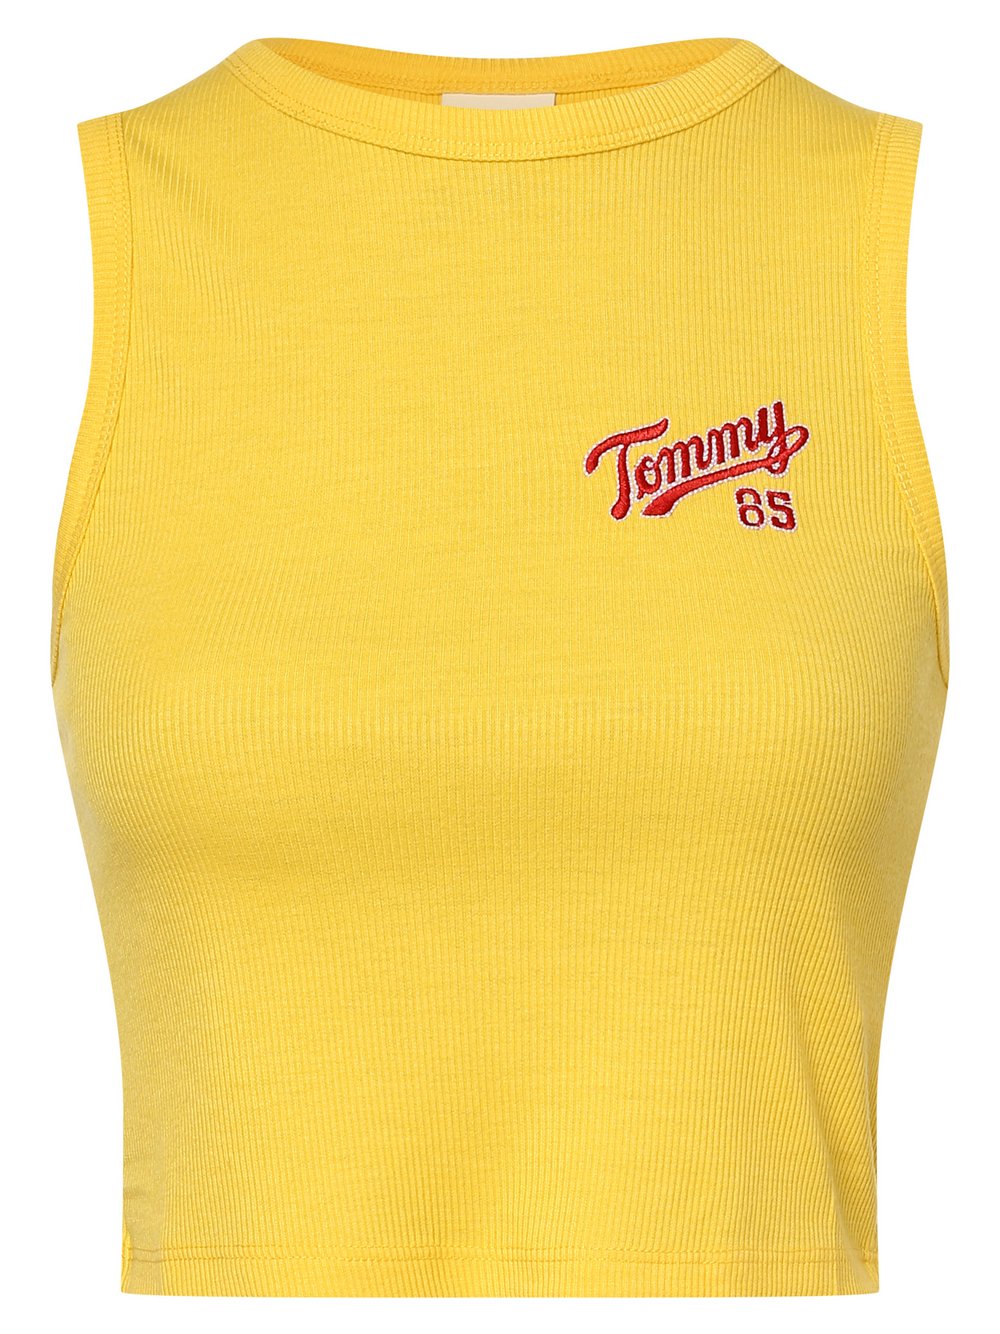 Tommy Jeans - Top damski, żółty